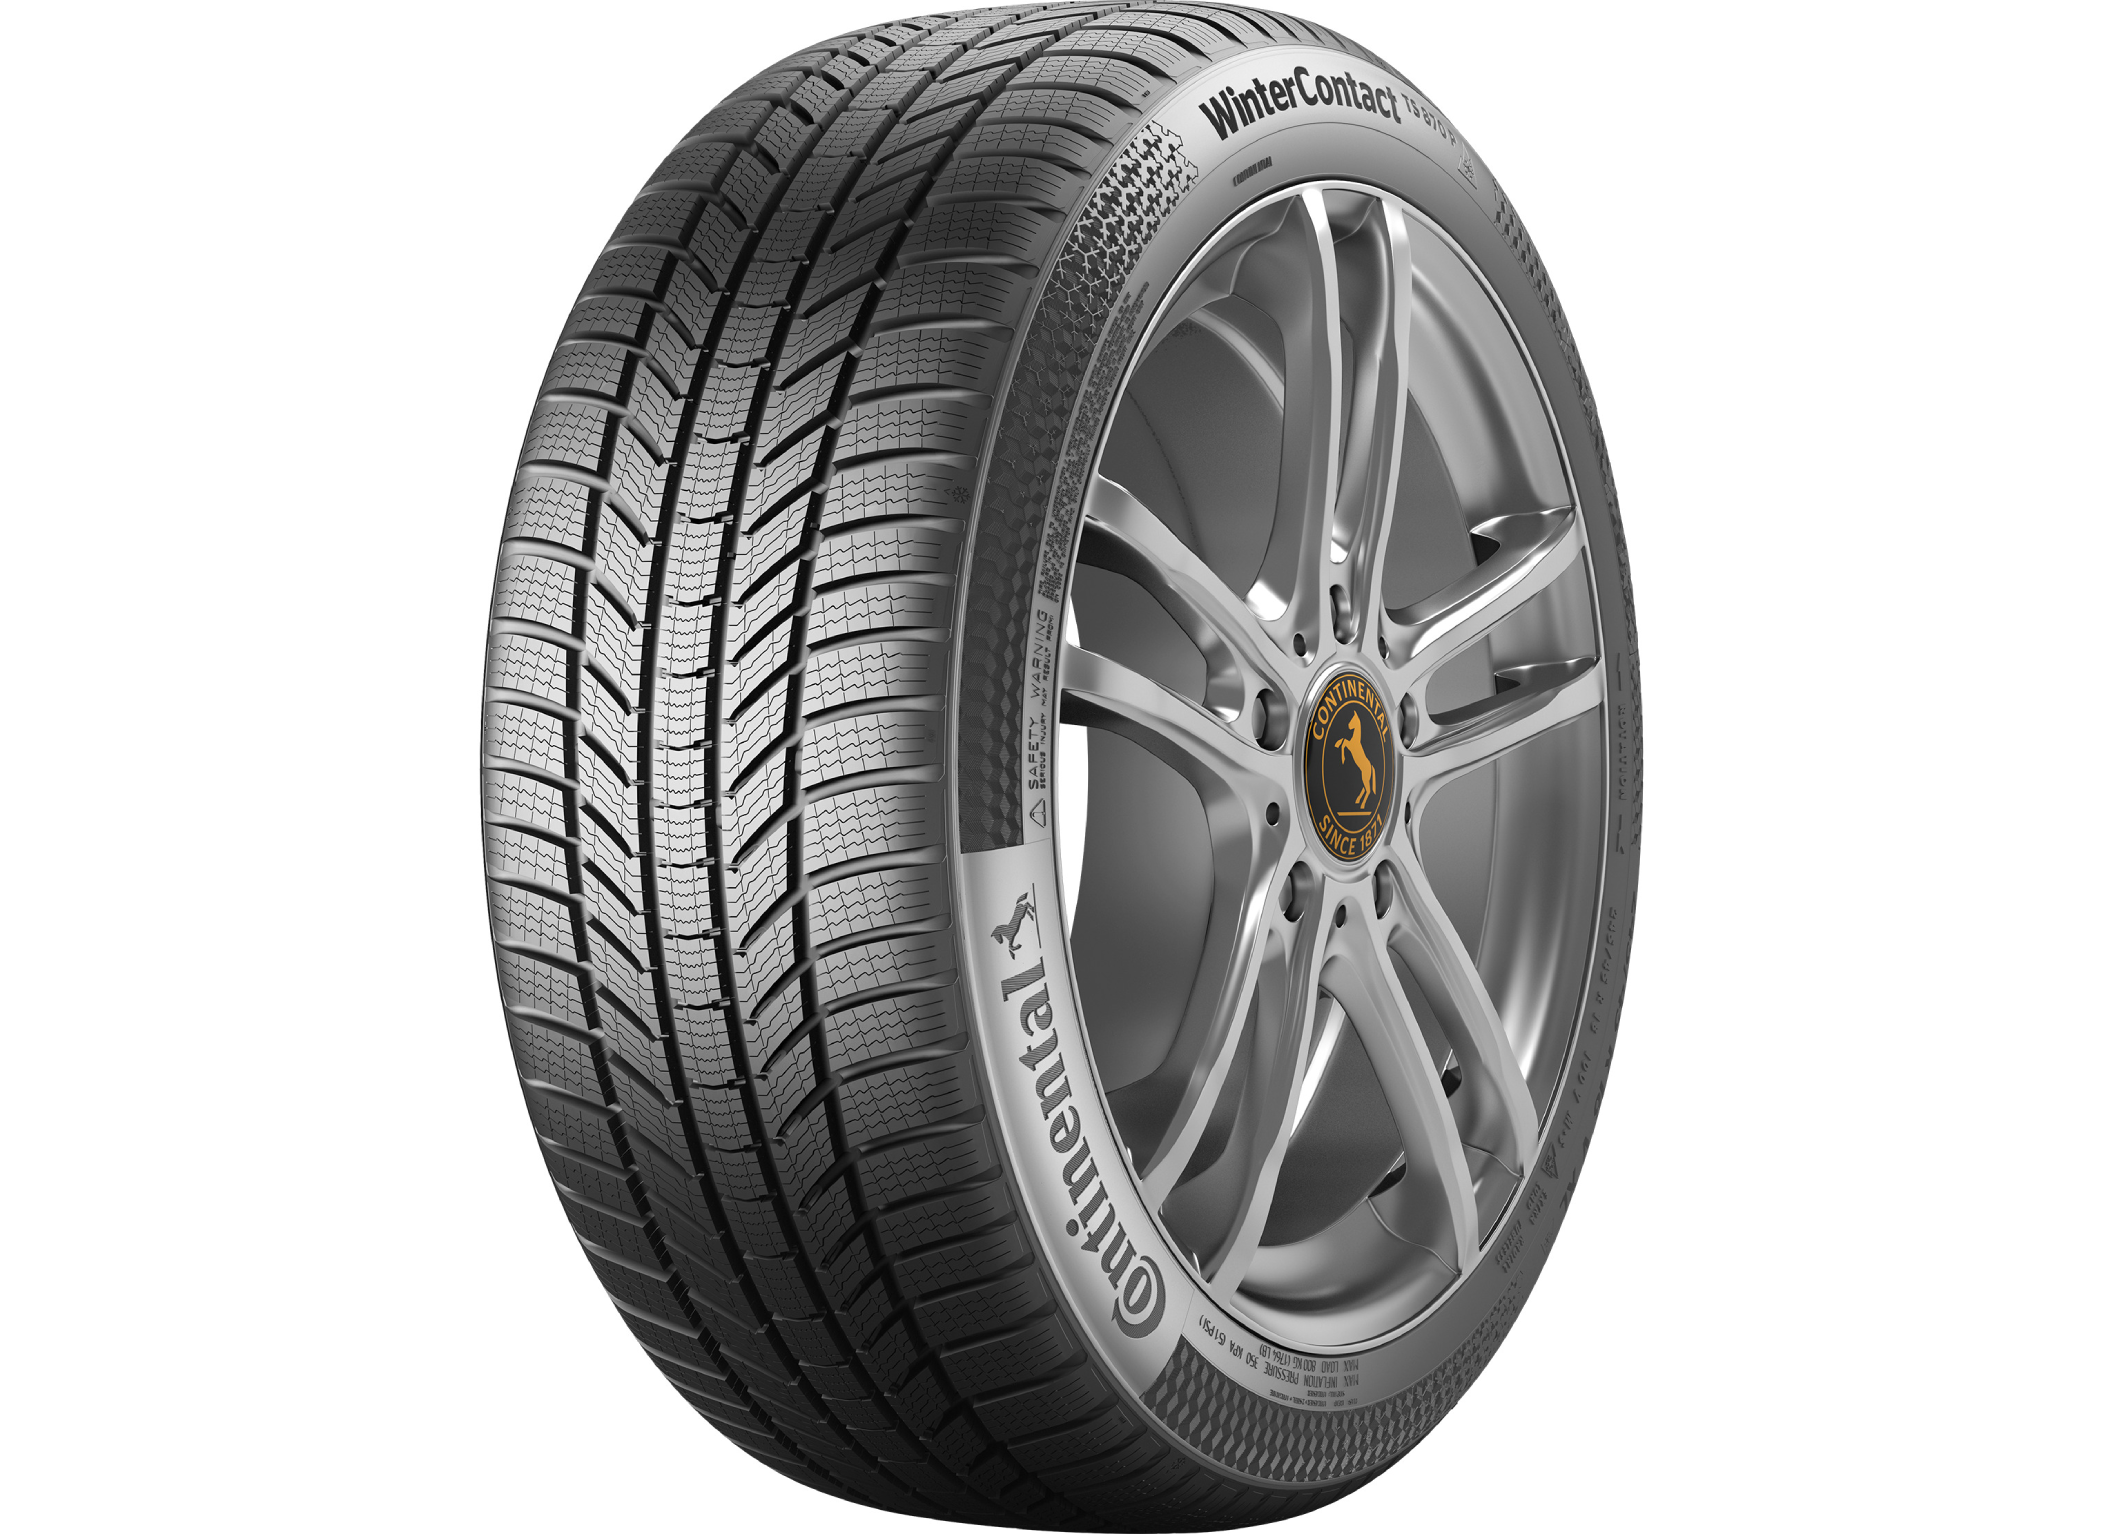 Conti -winter- tyres